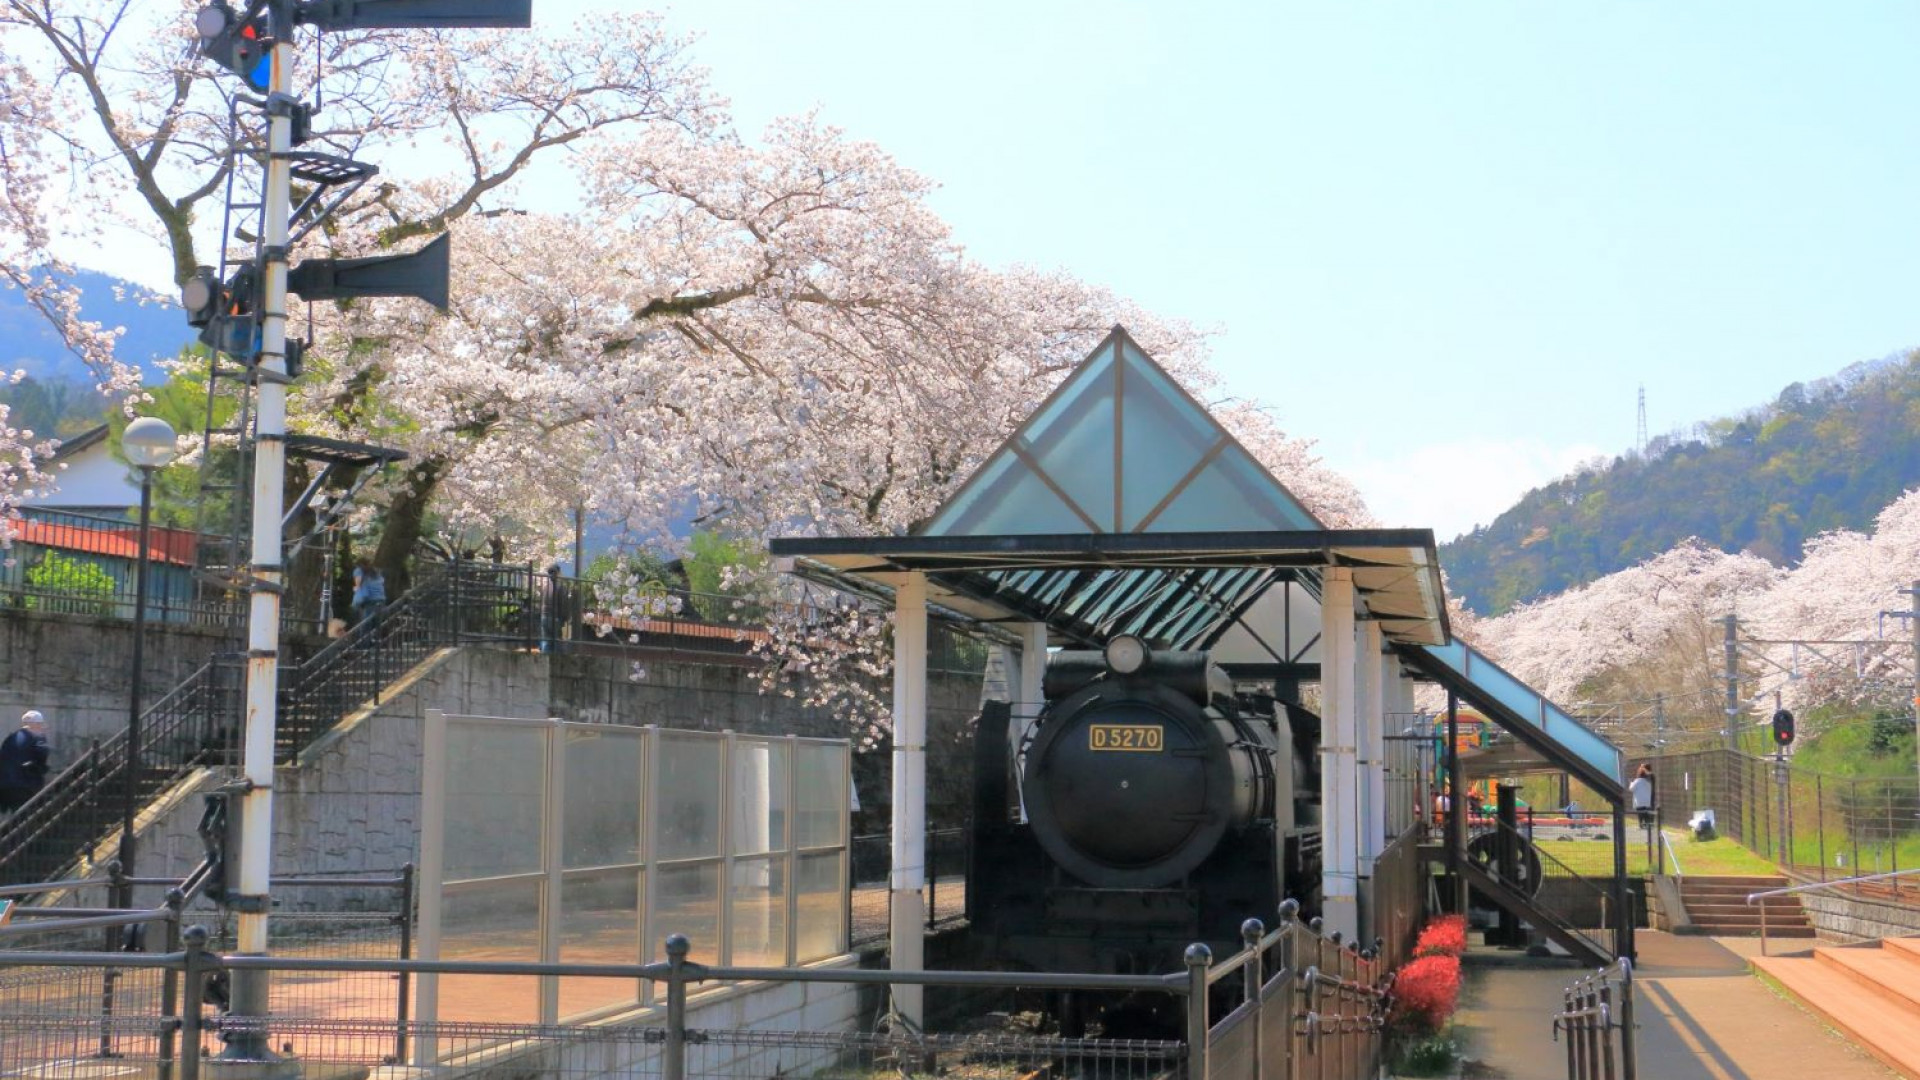 Le parc ferroviaire Yamakita